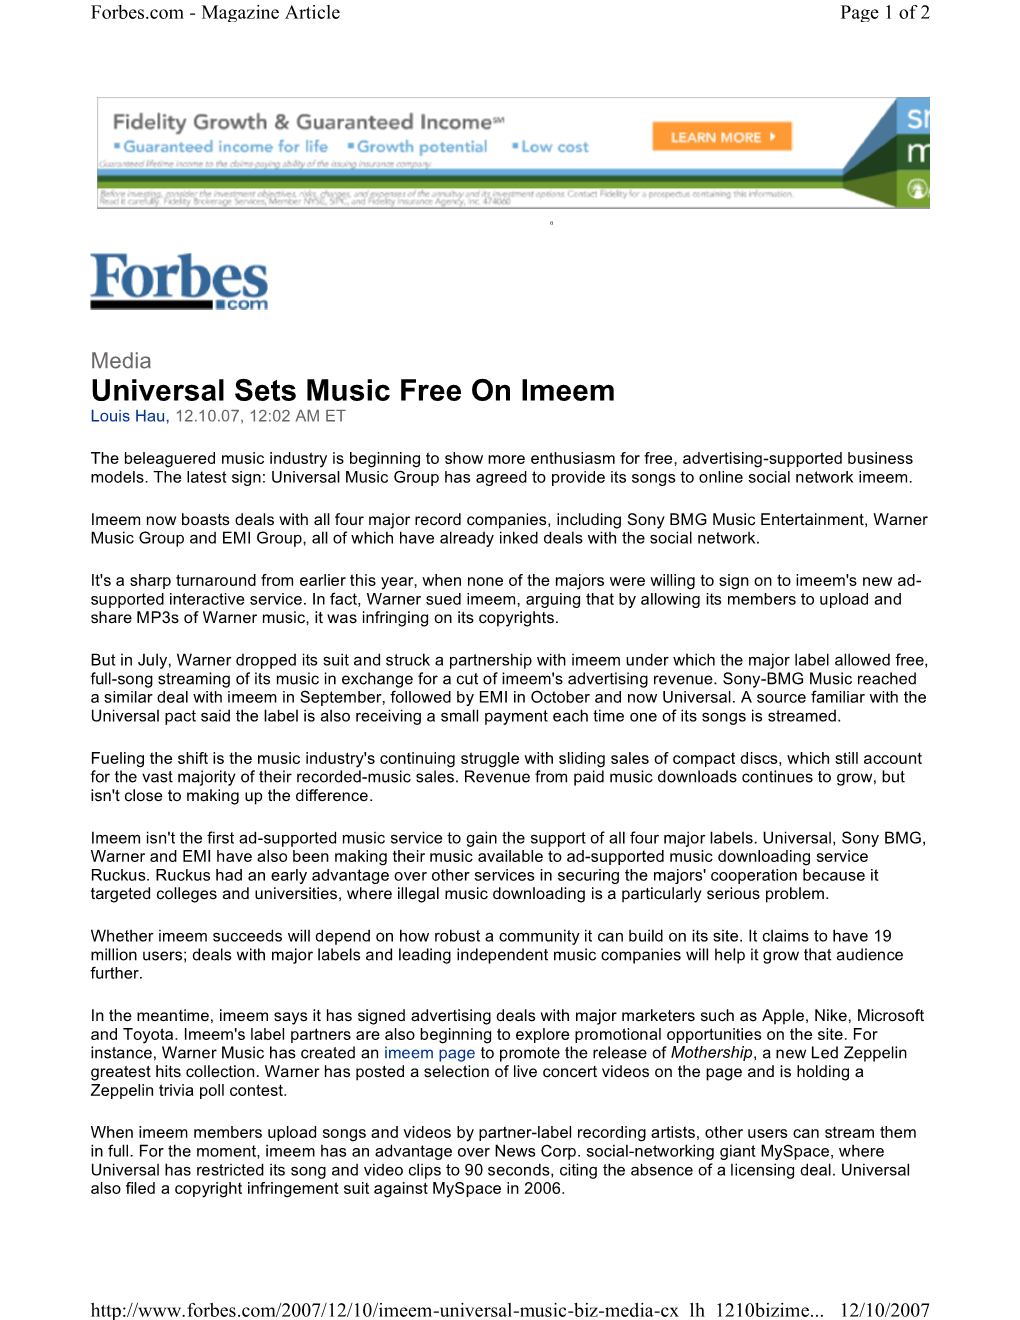 Universal Sets Music Free on Imeem Louis Hau, 12.10.07, 12:02 AM ET